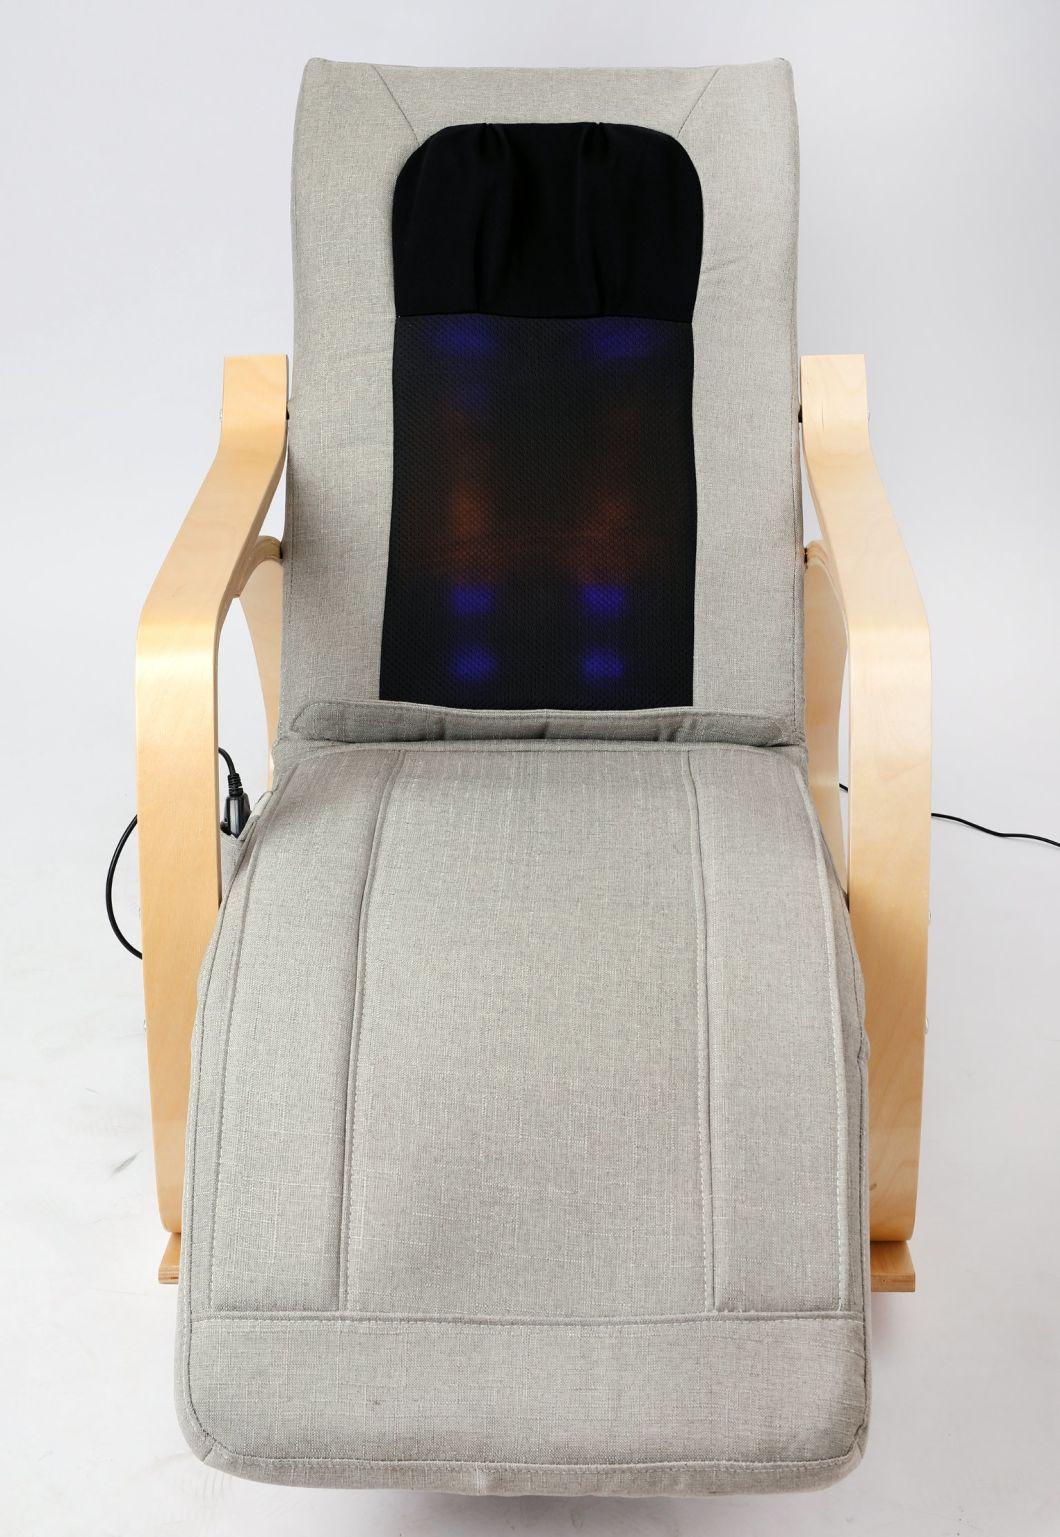 Best Price China Mini Electric Full Body Vibration Shiatsu Reclining Rocker Massage Chair with Heating